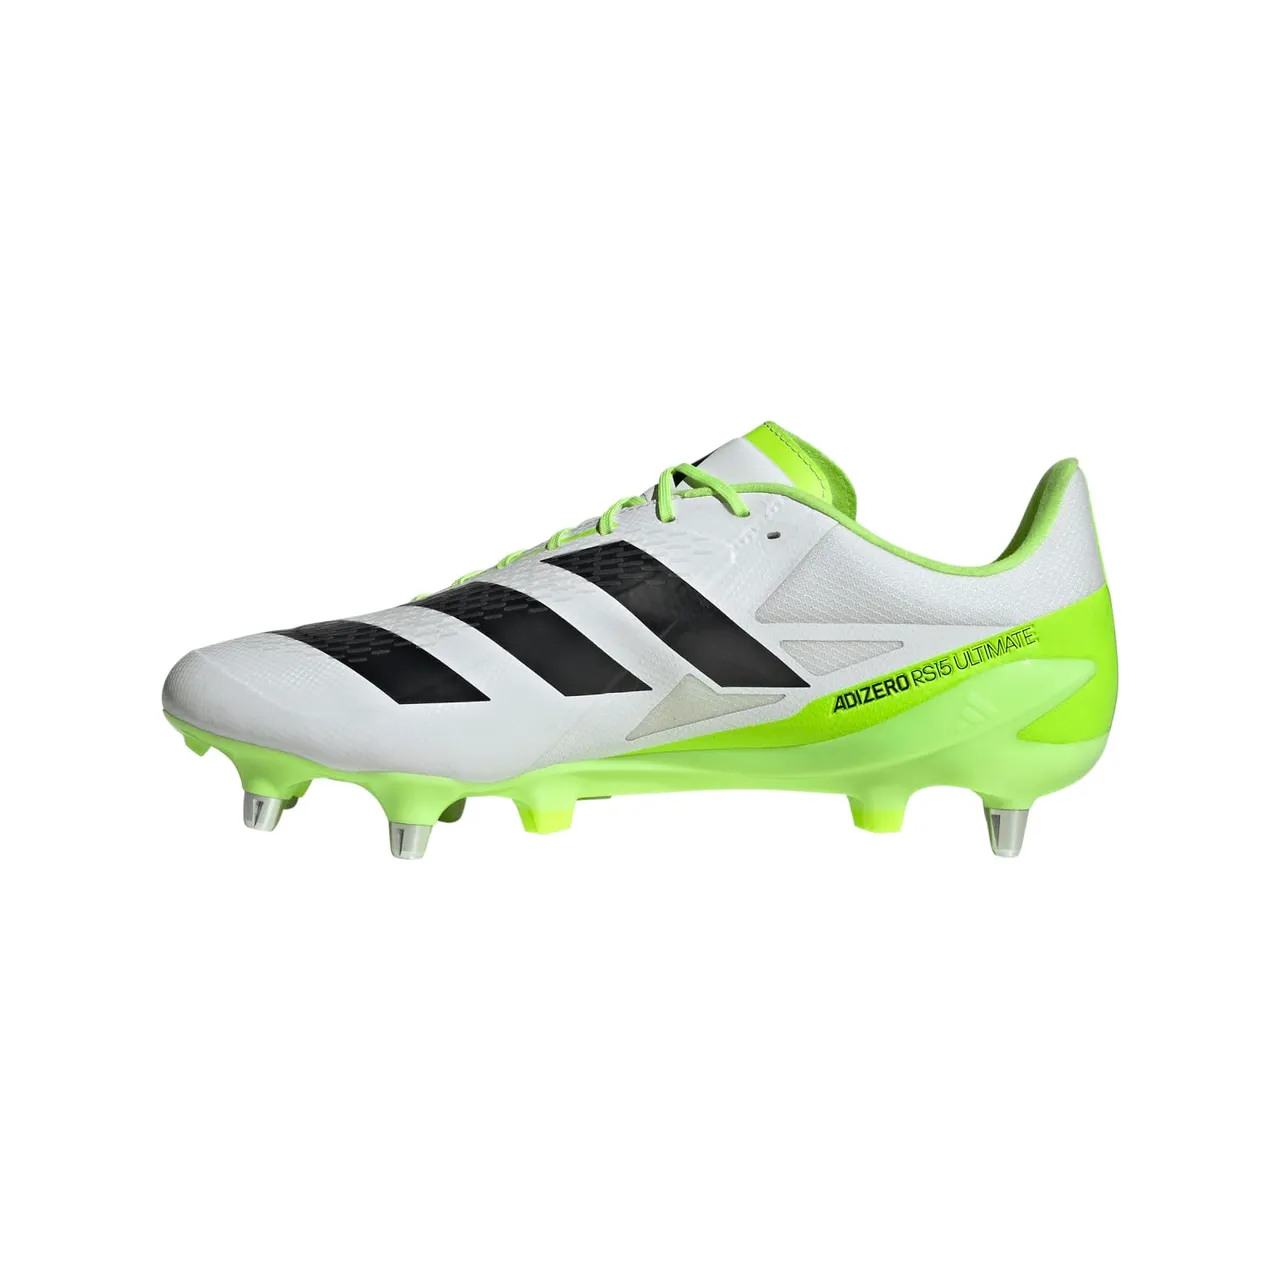 adidas Unisex Adizero Rs15 Ultimate (Sg) Football Shoes